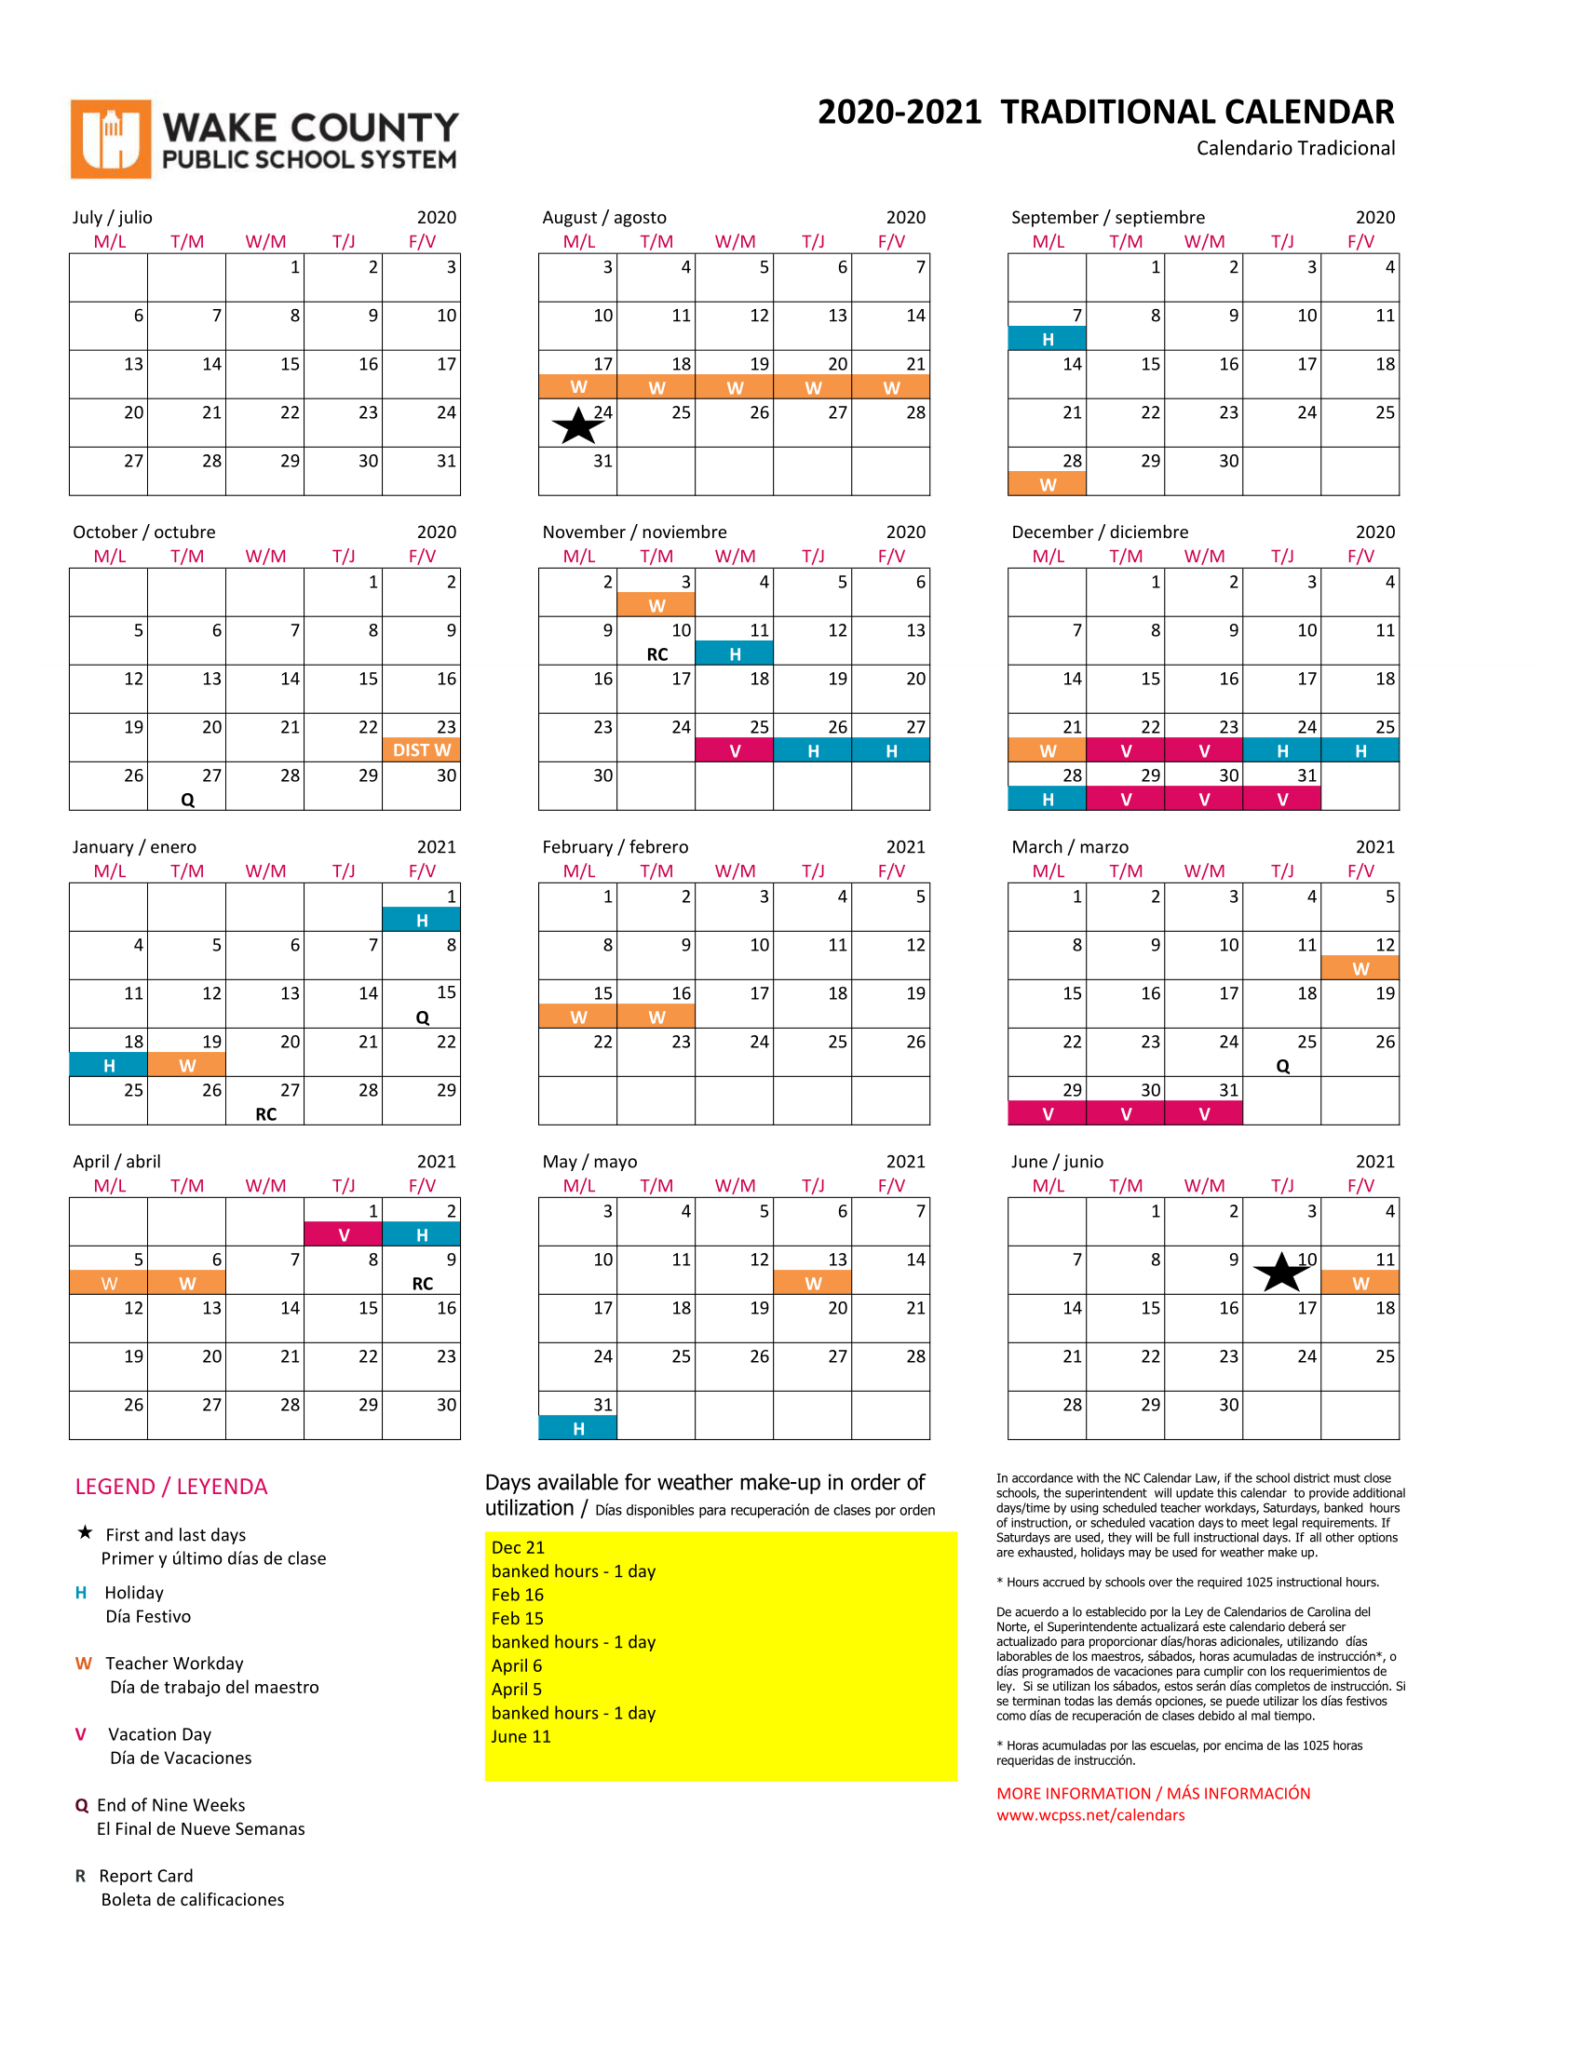 Wake County Public School Calendar County School Calendar